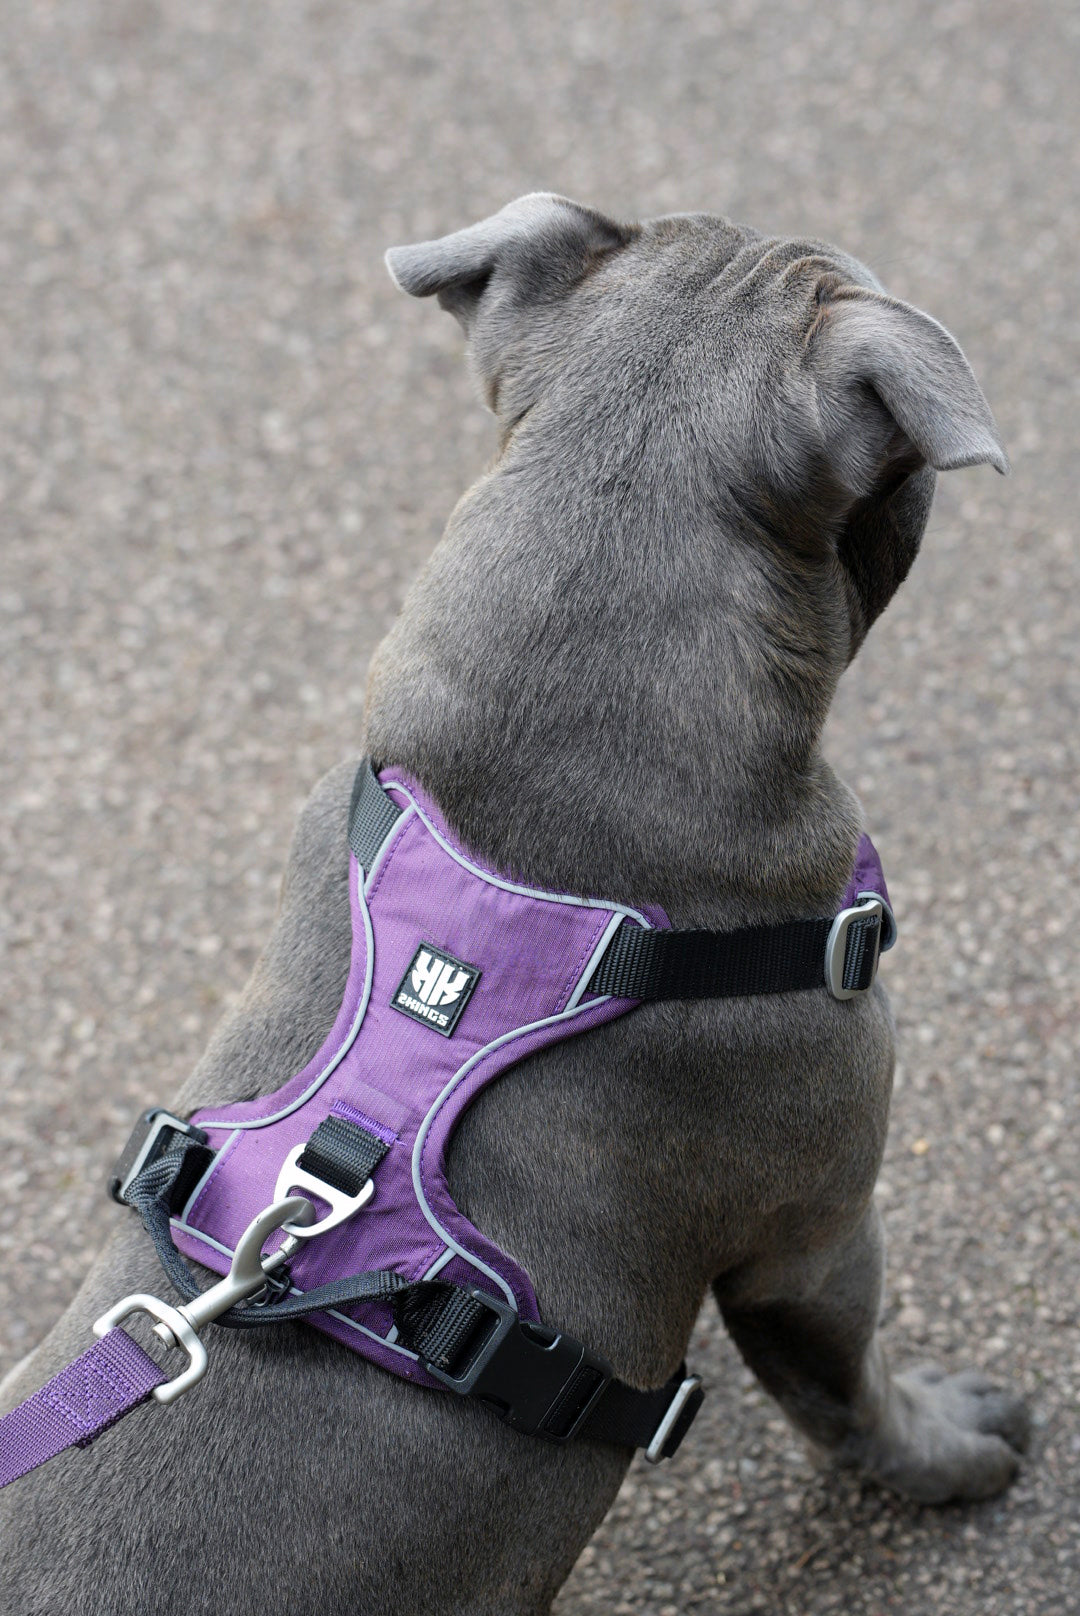 Comfort Dog Harness & Classic Lead Set - Waterproof with Top Handle - Purple.